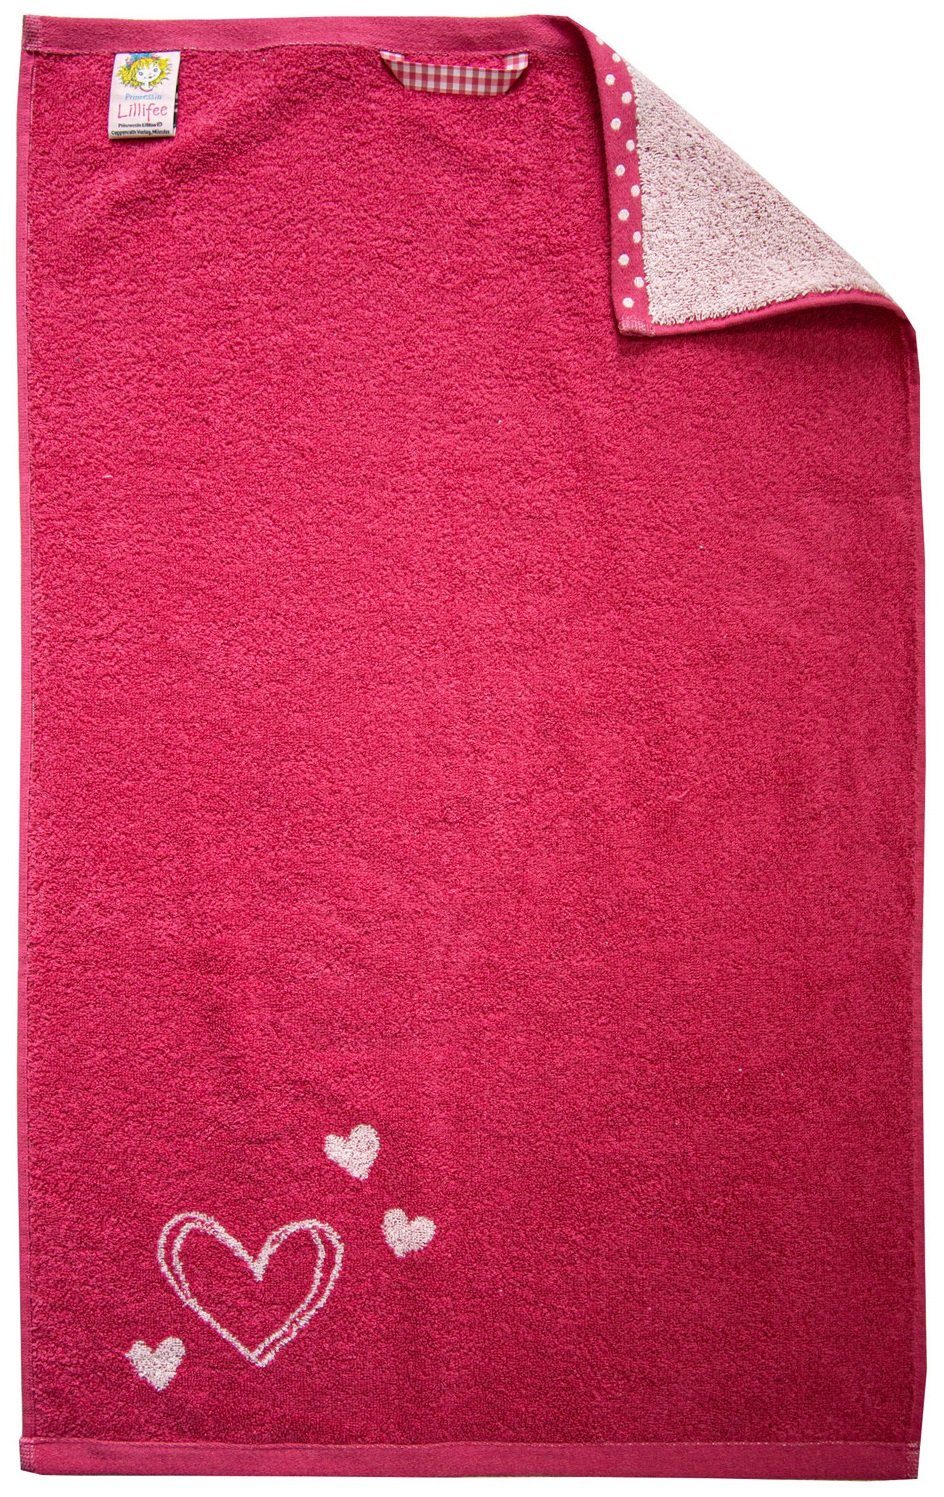 Handtuch Dyckhoff Pink Handtuch 'Lillifee' 70 Dyckhoff Kinderfrottierserie x 50 cm